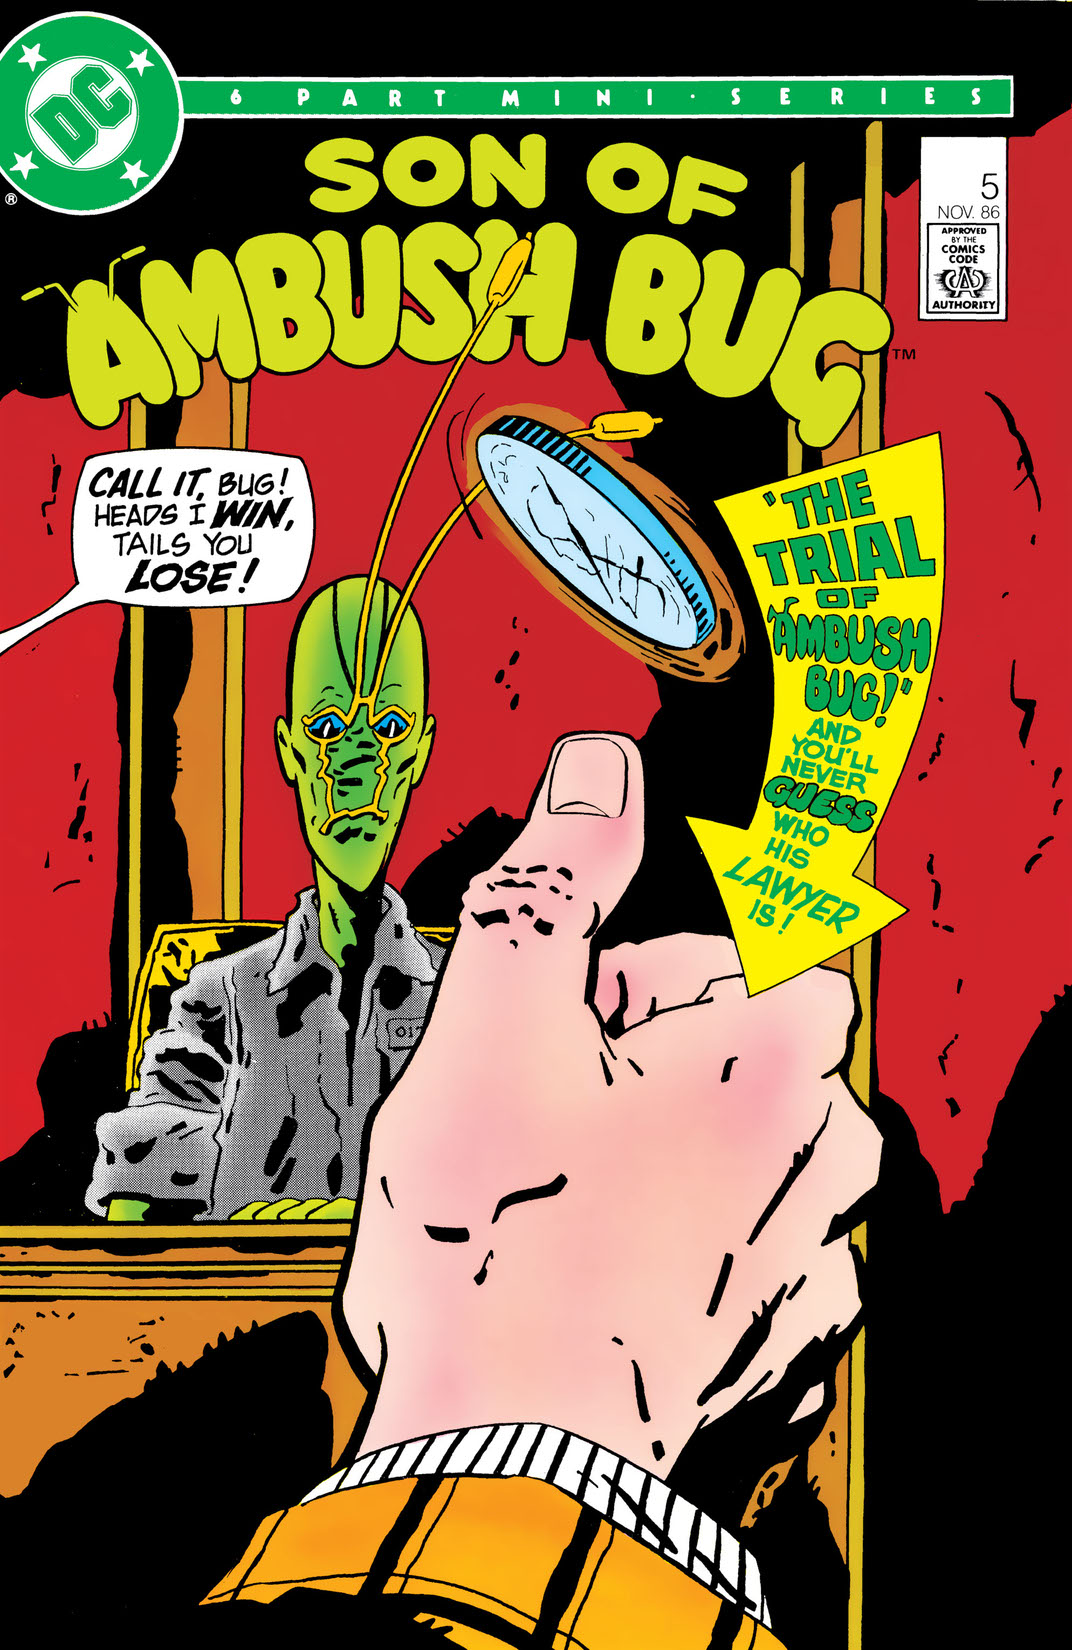 Son of Ambush Bug #5 preview images